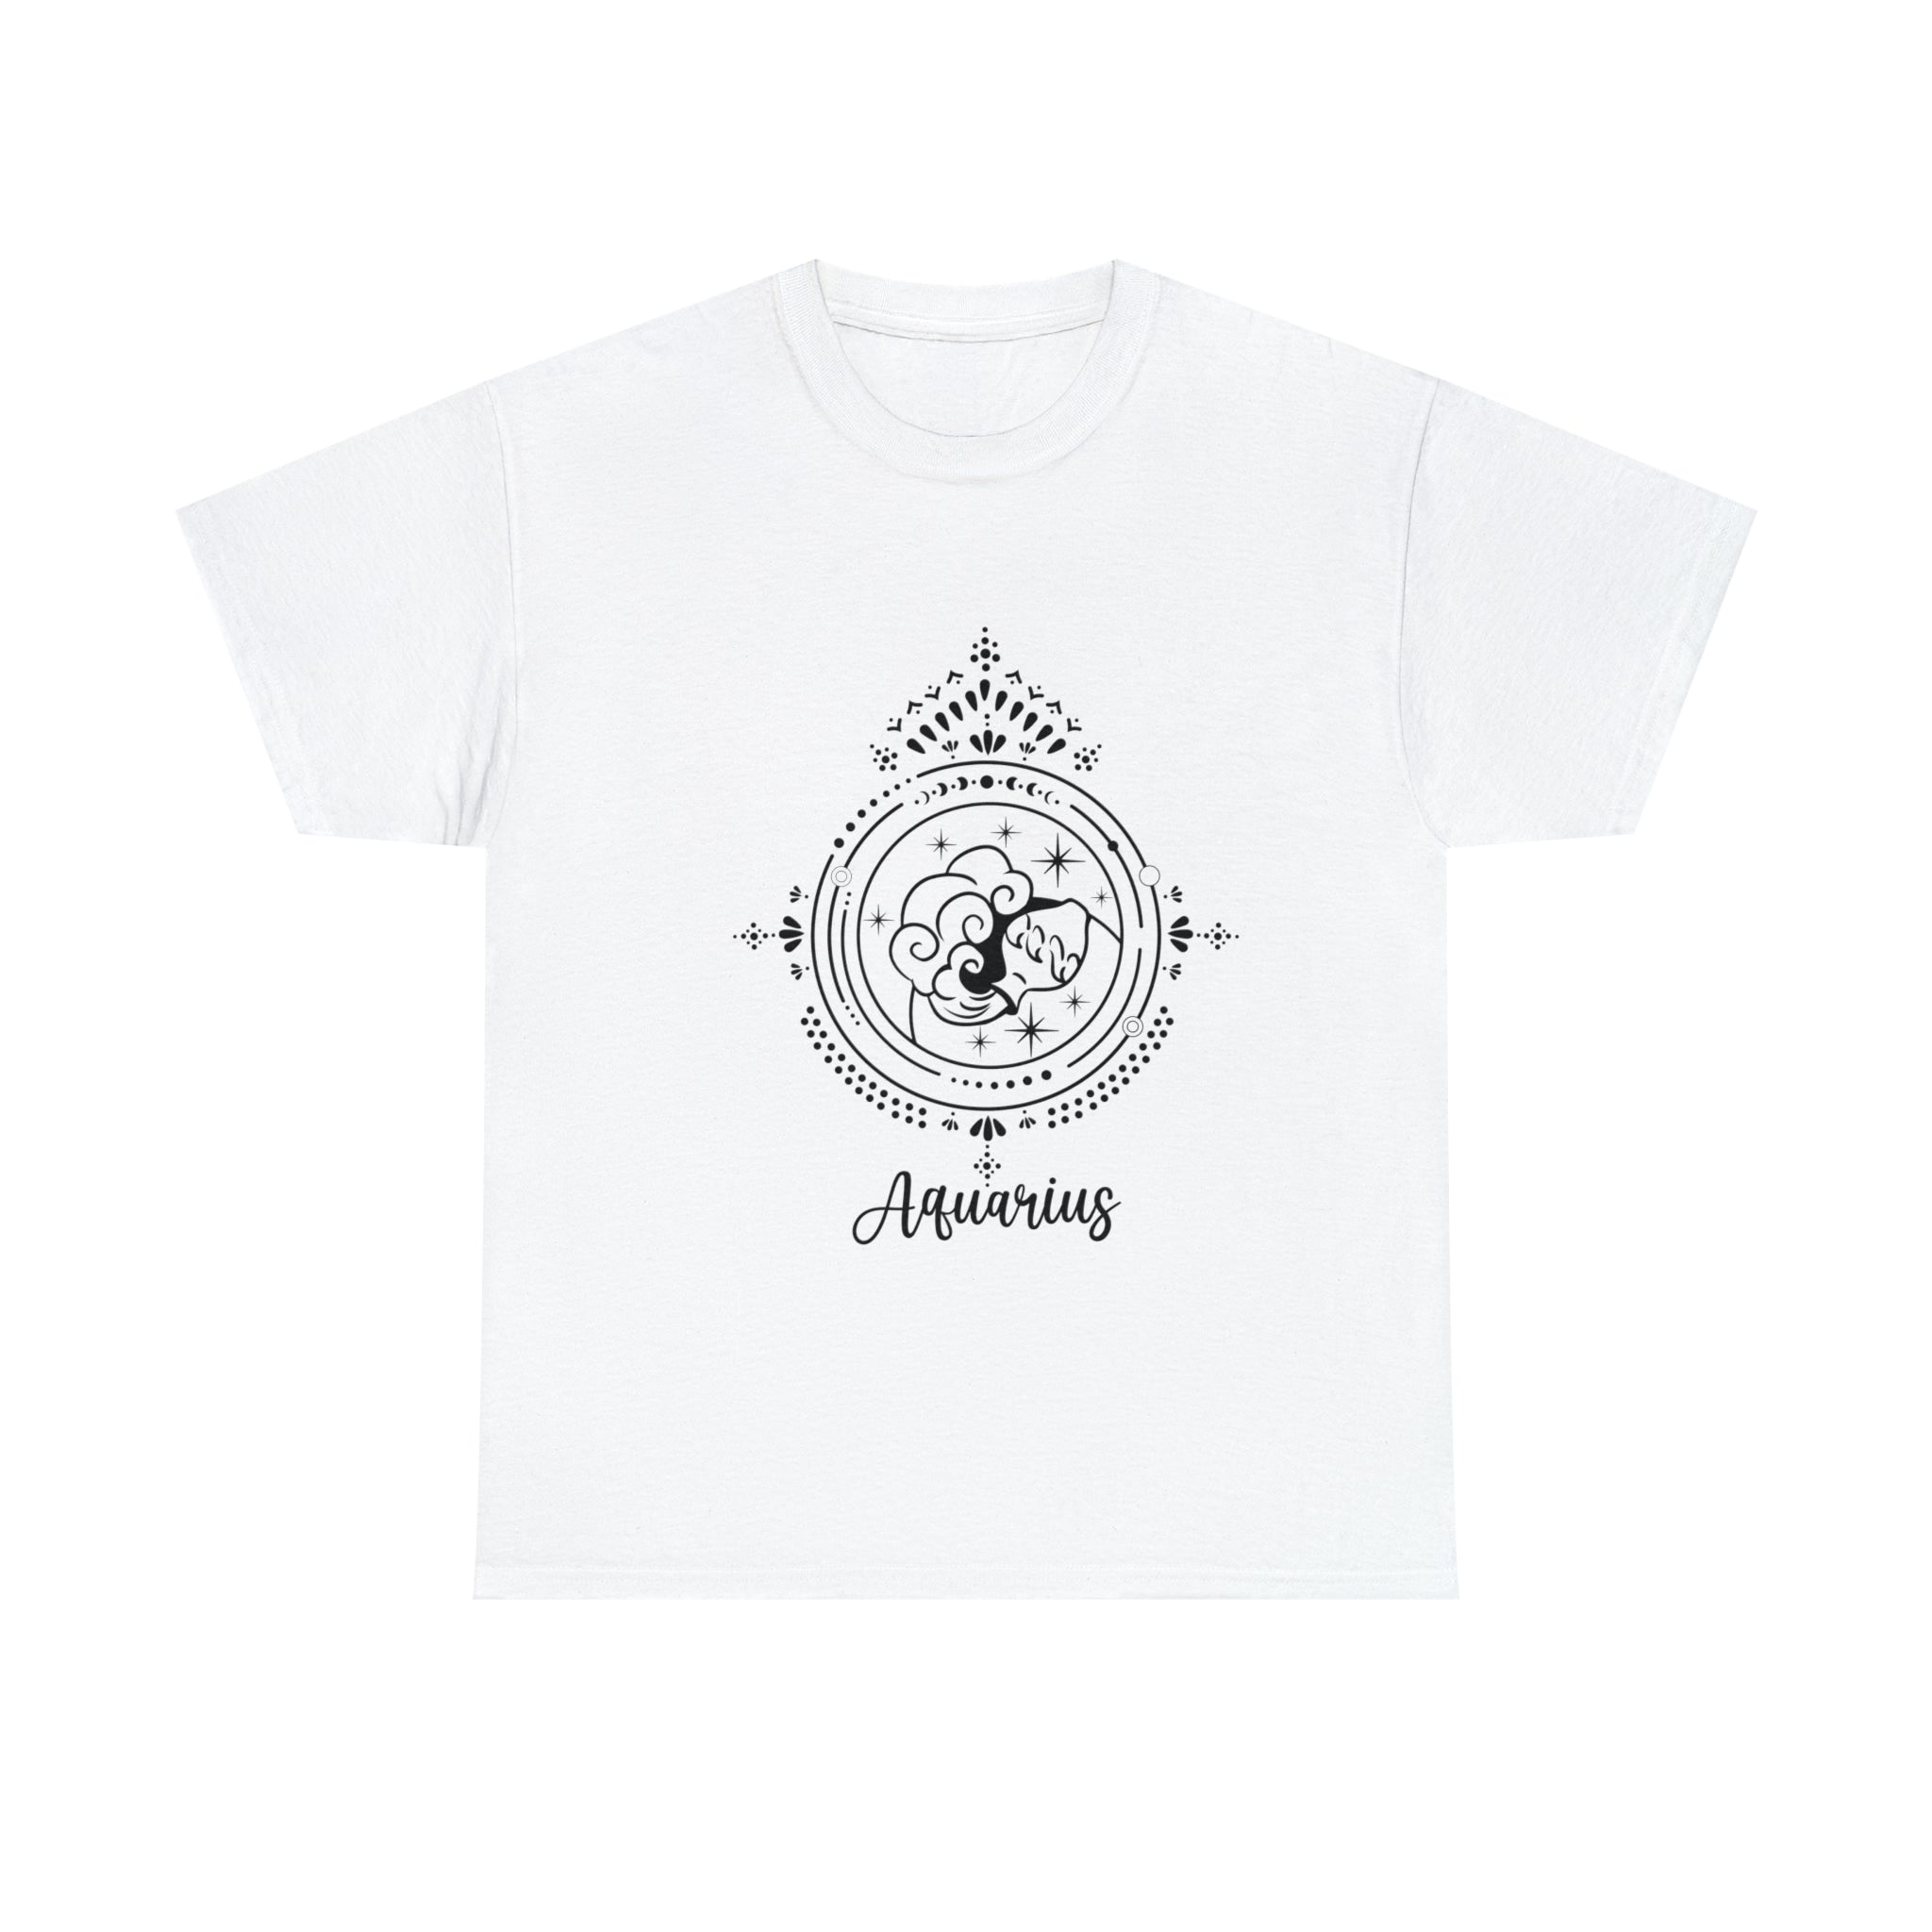 An Aquarius T-Shirt with a creative graphic design.